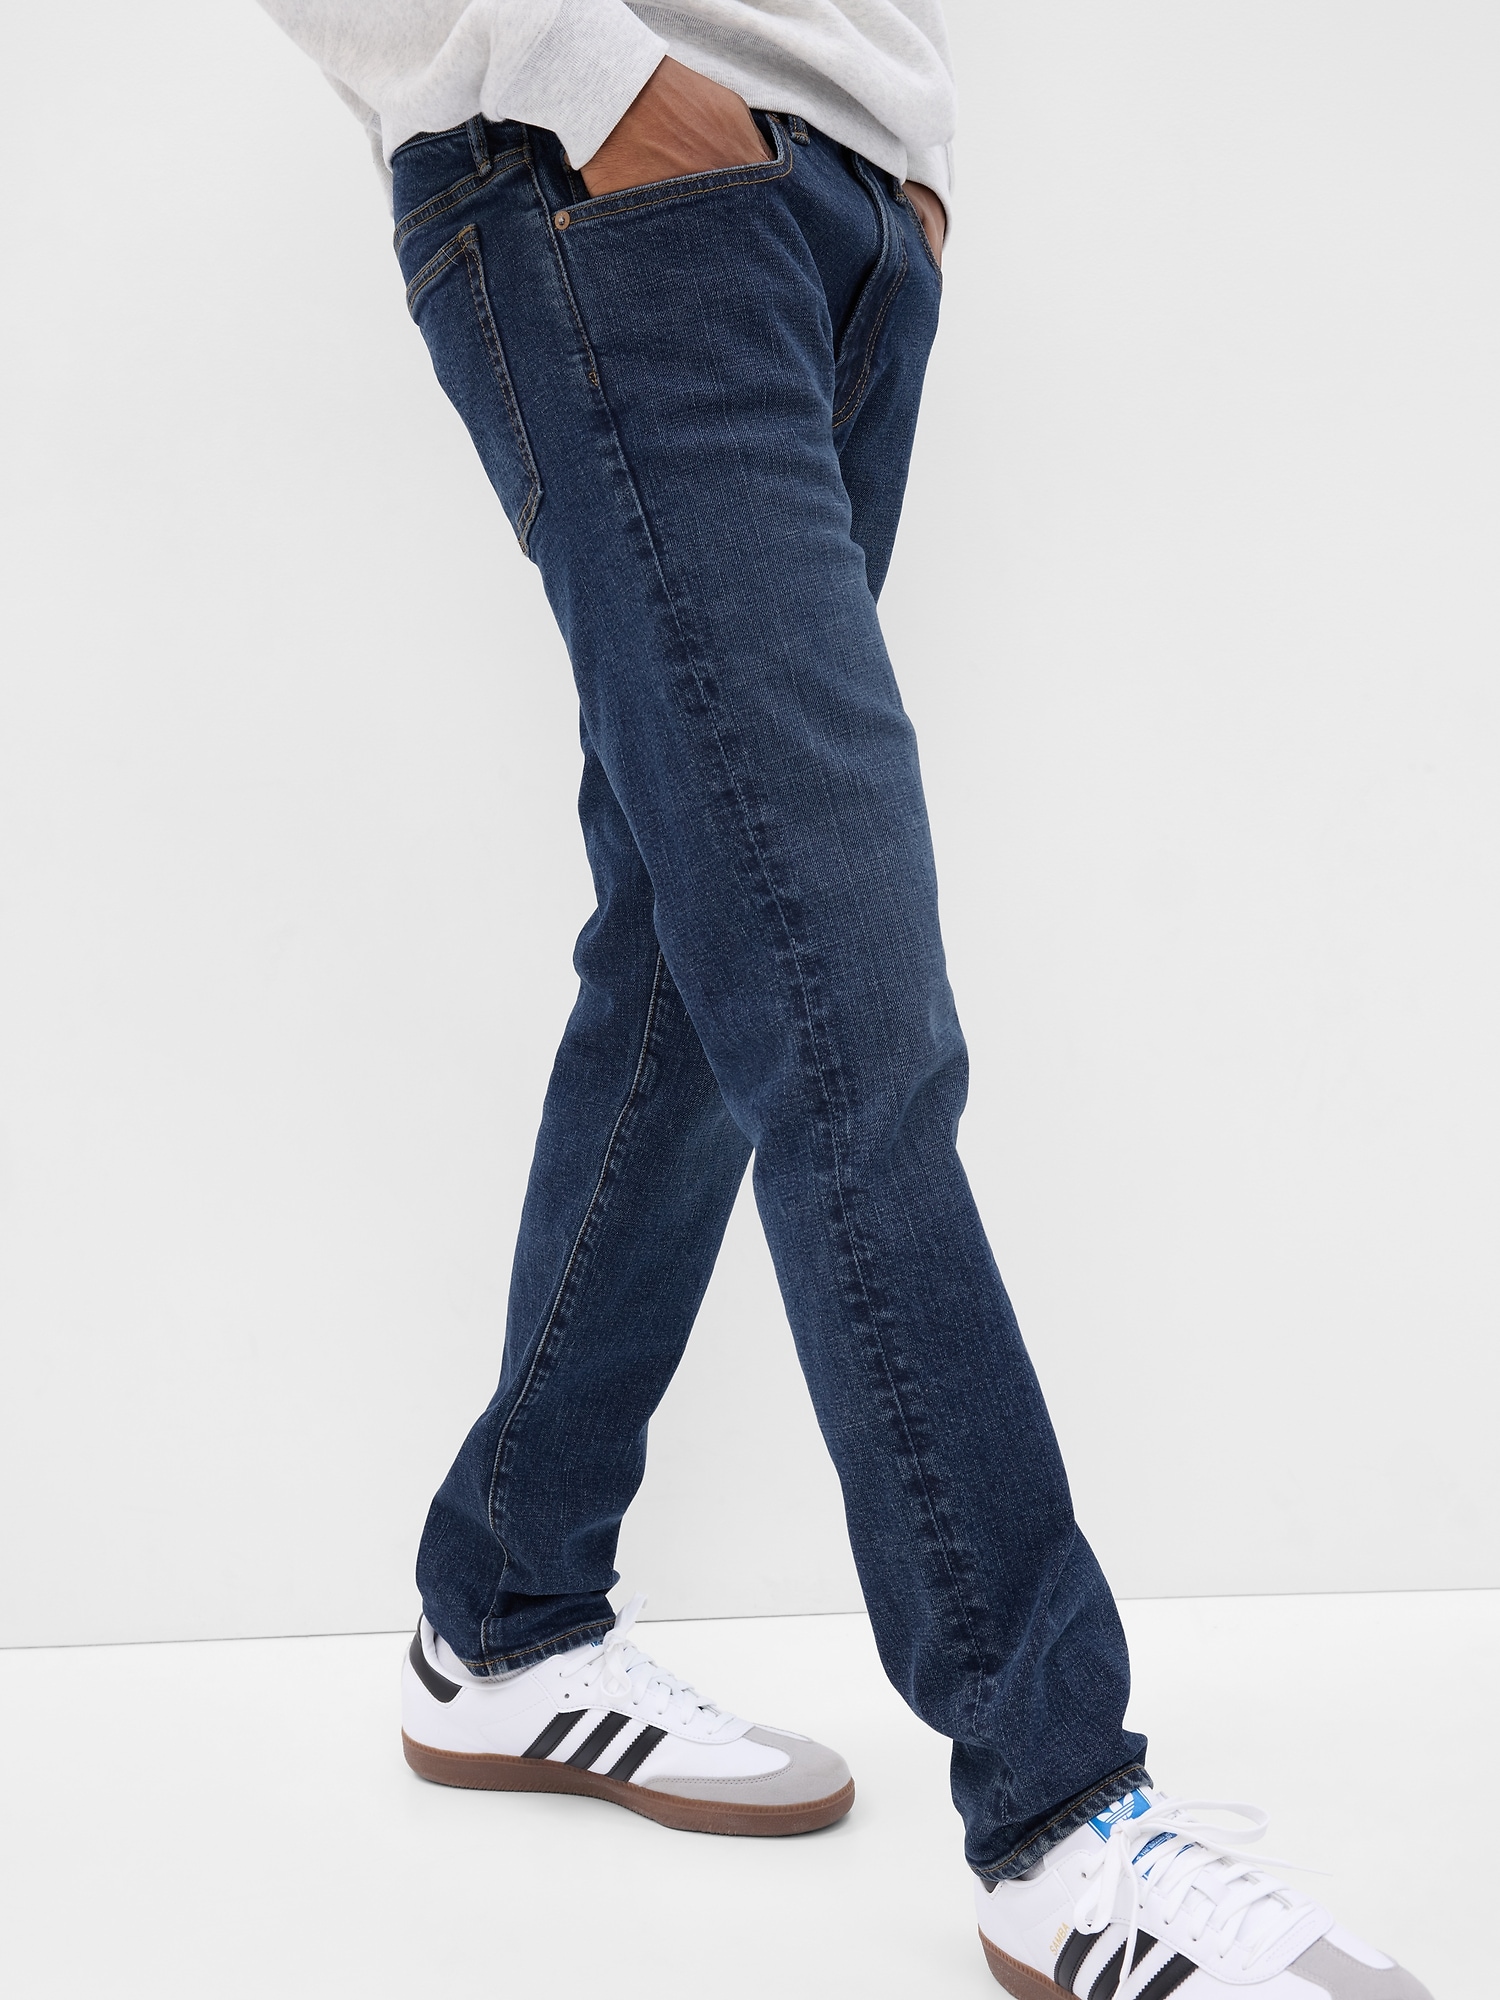 Van God Tirannie Dij Slim Jeans in GapFlex with Washwell | Gap